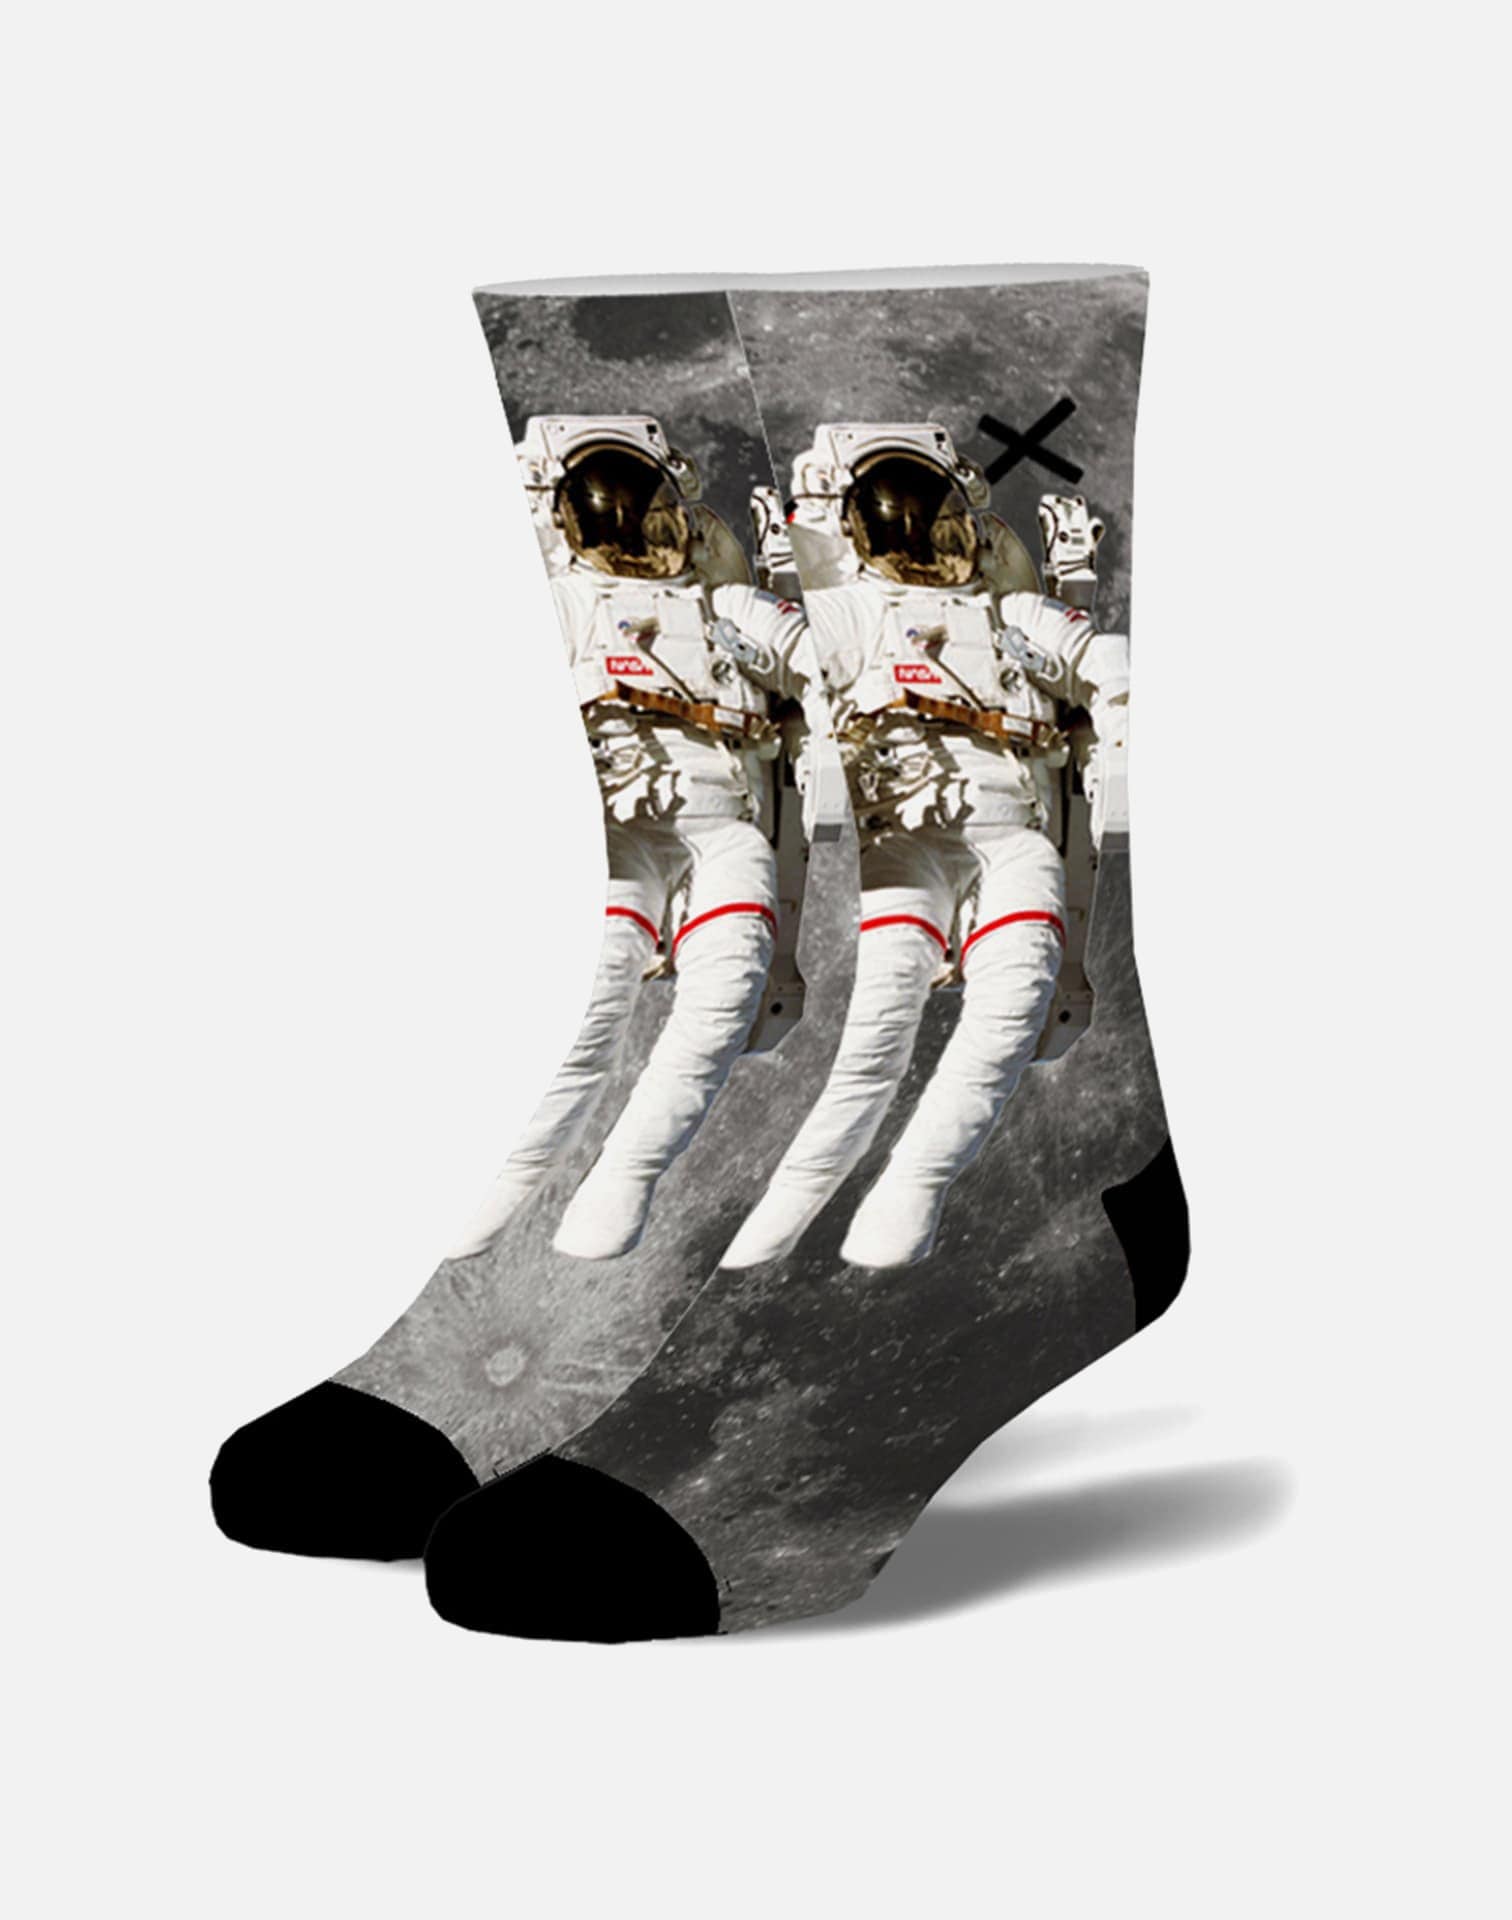 Odd Sox Lunar Astronaut Crew Socks